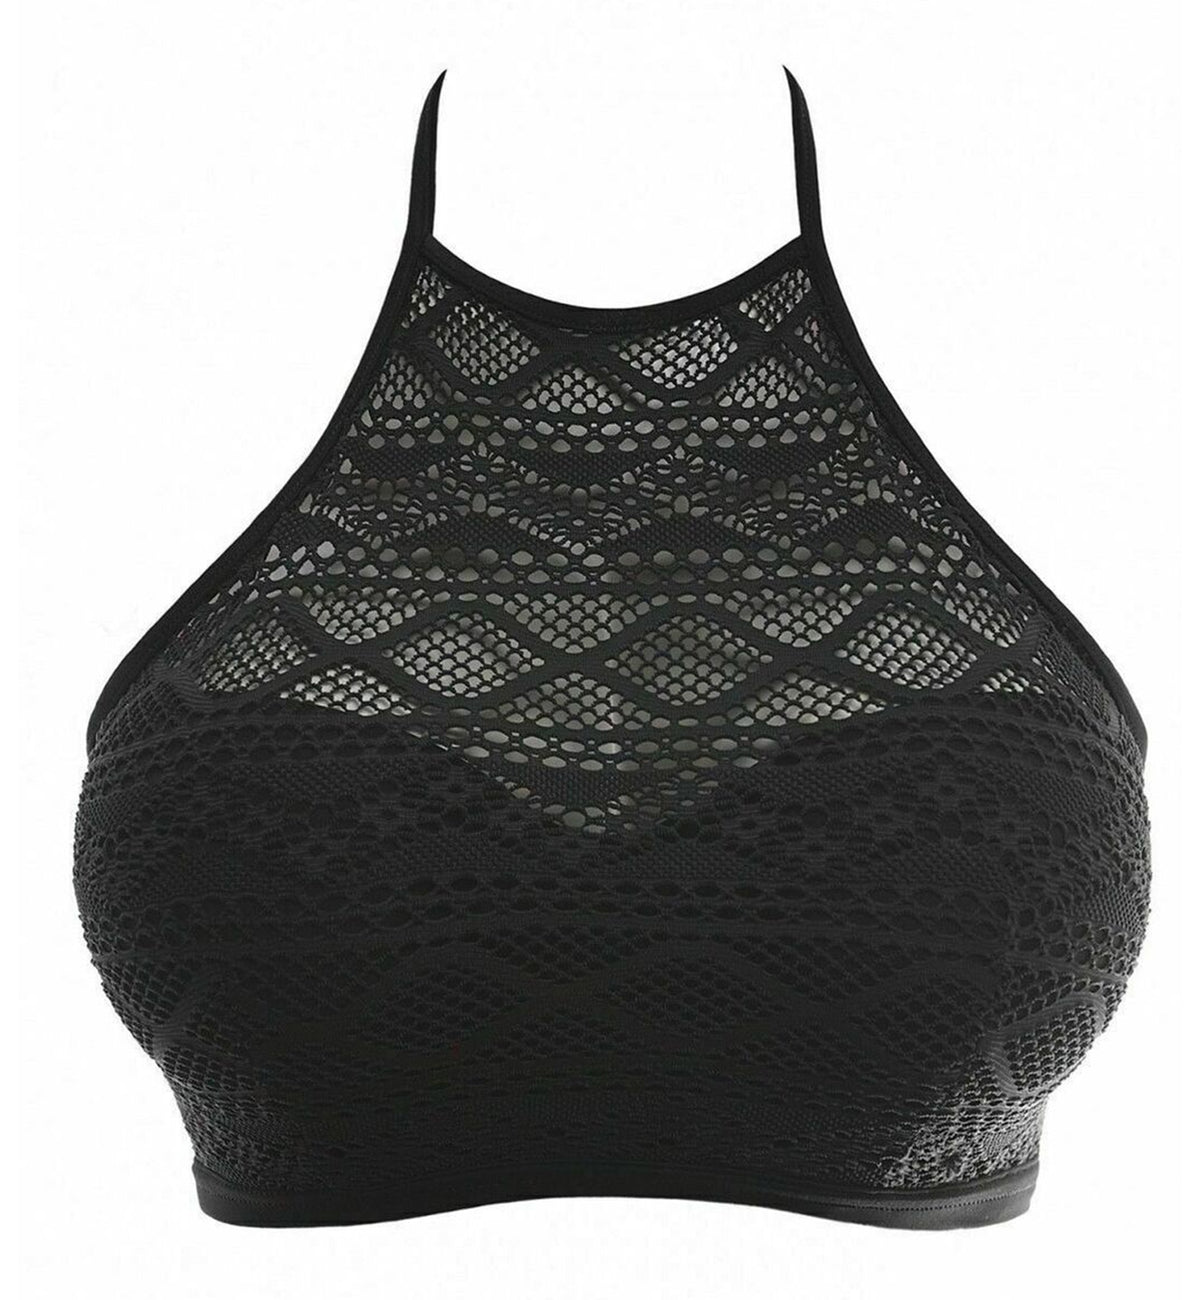 Freya Sundance Crochet Padded Underwire High-Neck Crop Top Bikini (3973),28D,Black - Black,28D